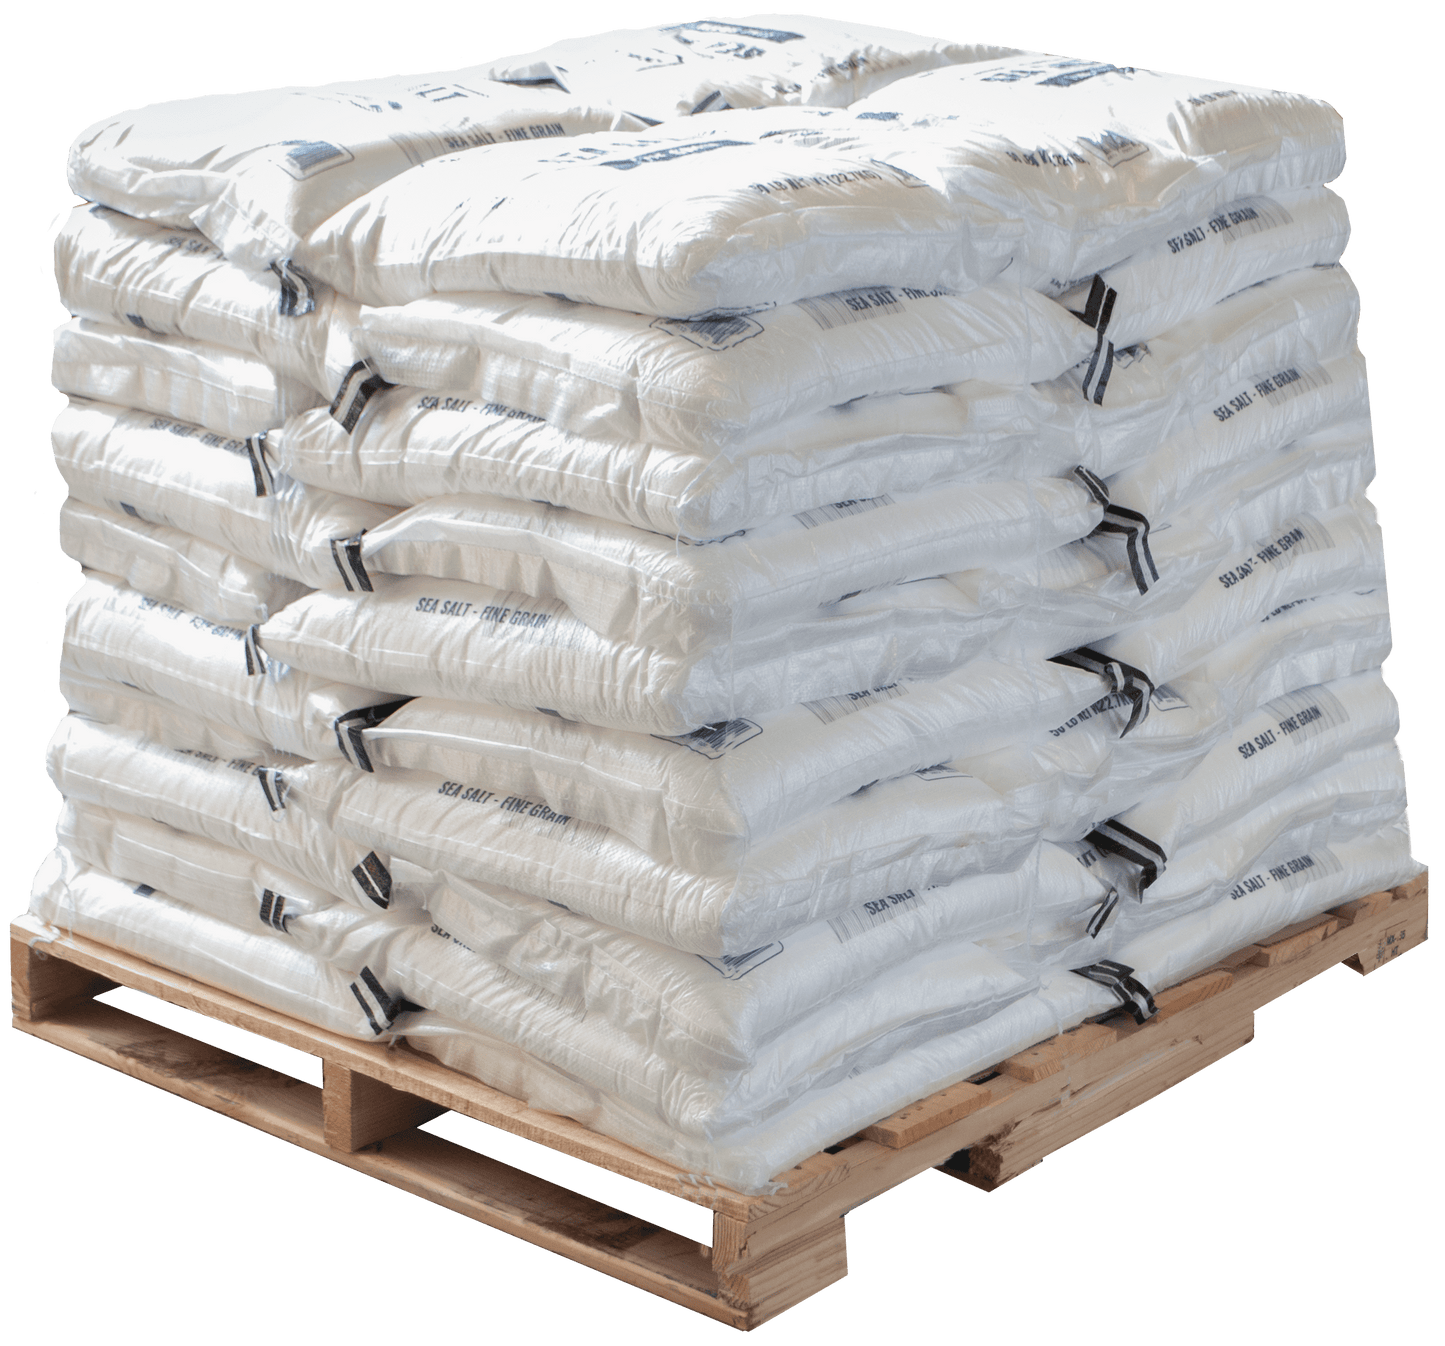 Natural Sea Salt - Small Grain - No Additives